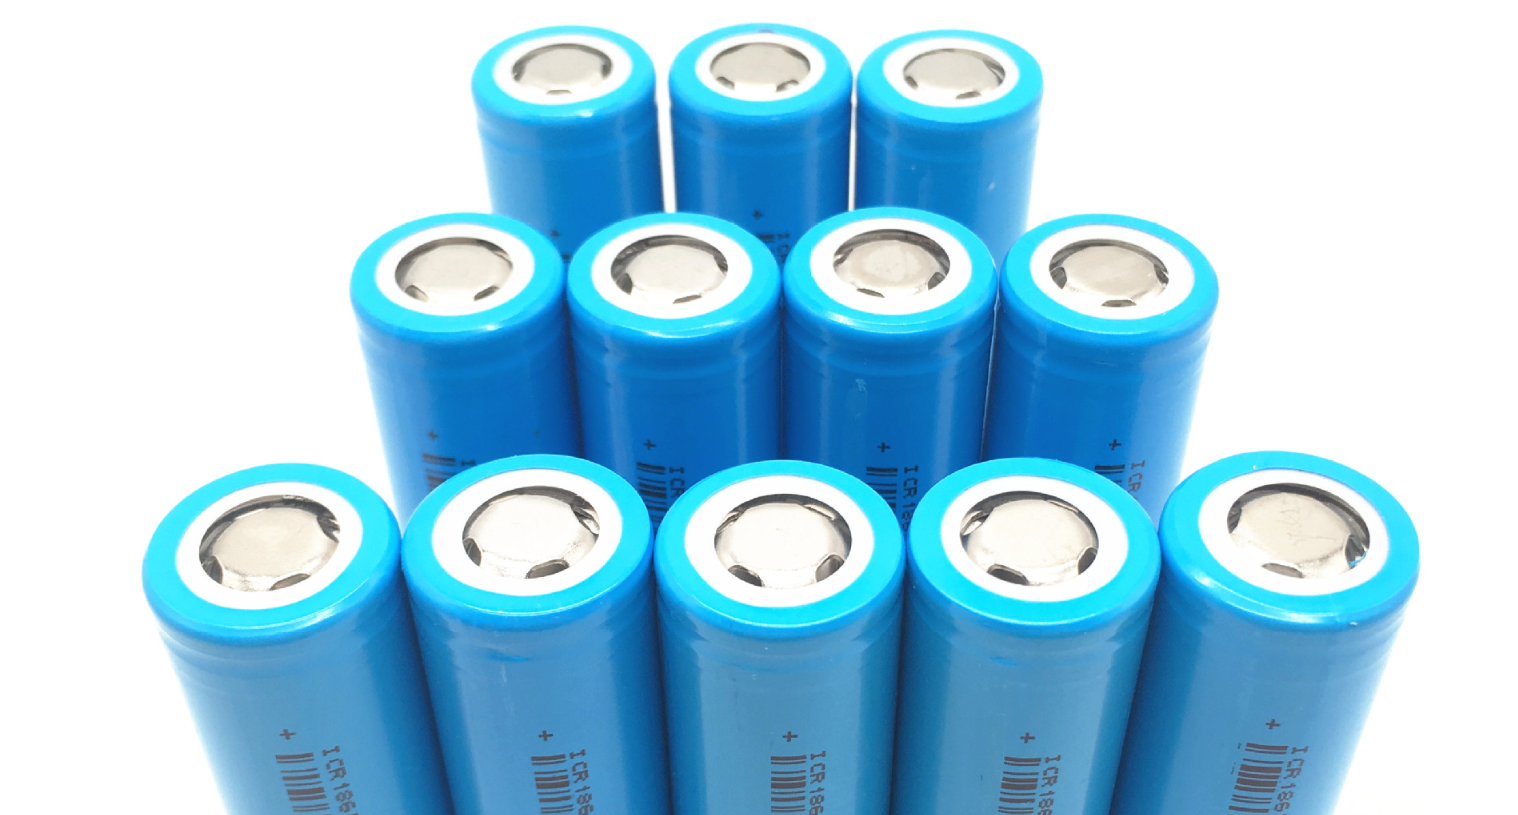 Advantages and Disadvantages of 18650 Lithium Batteries